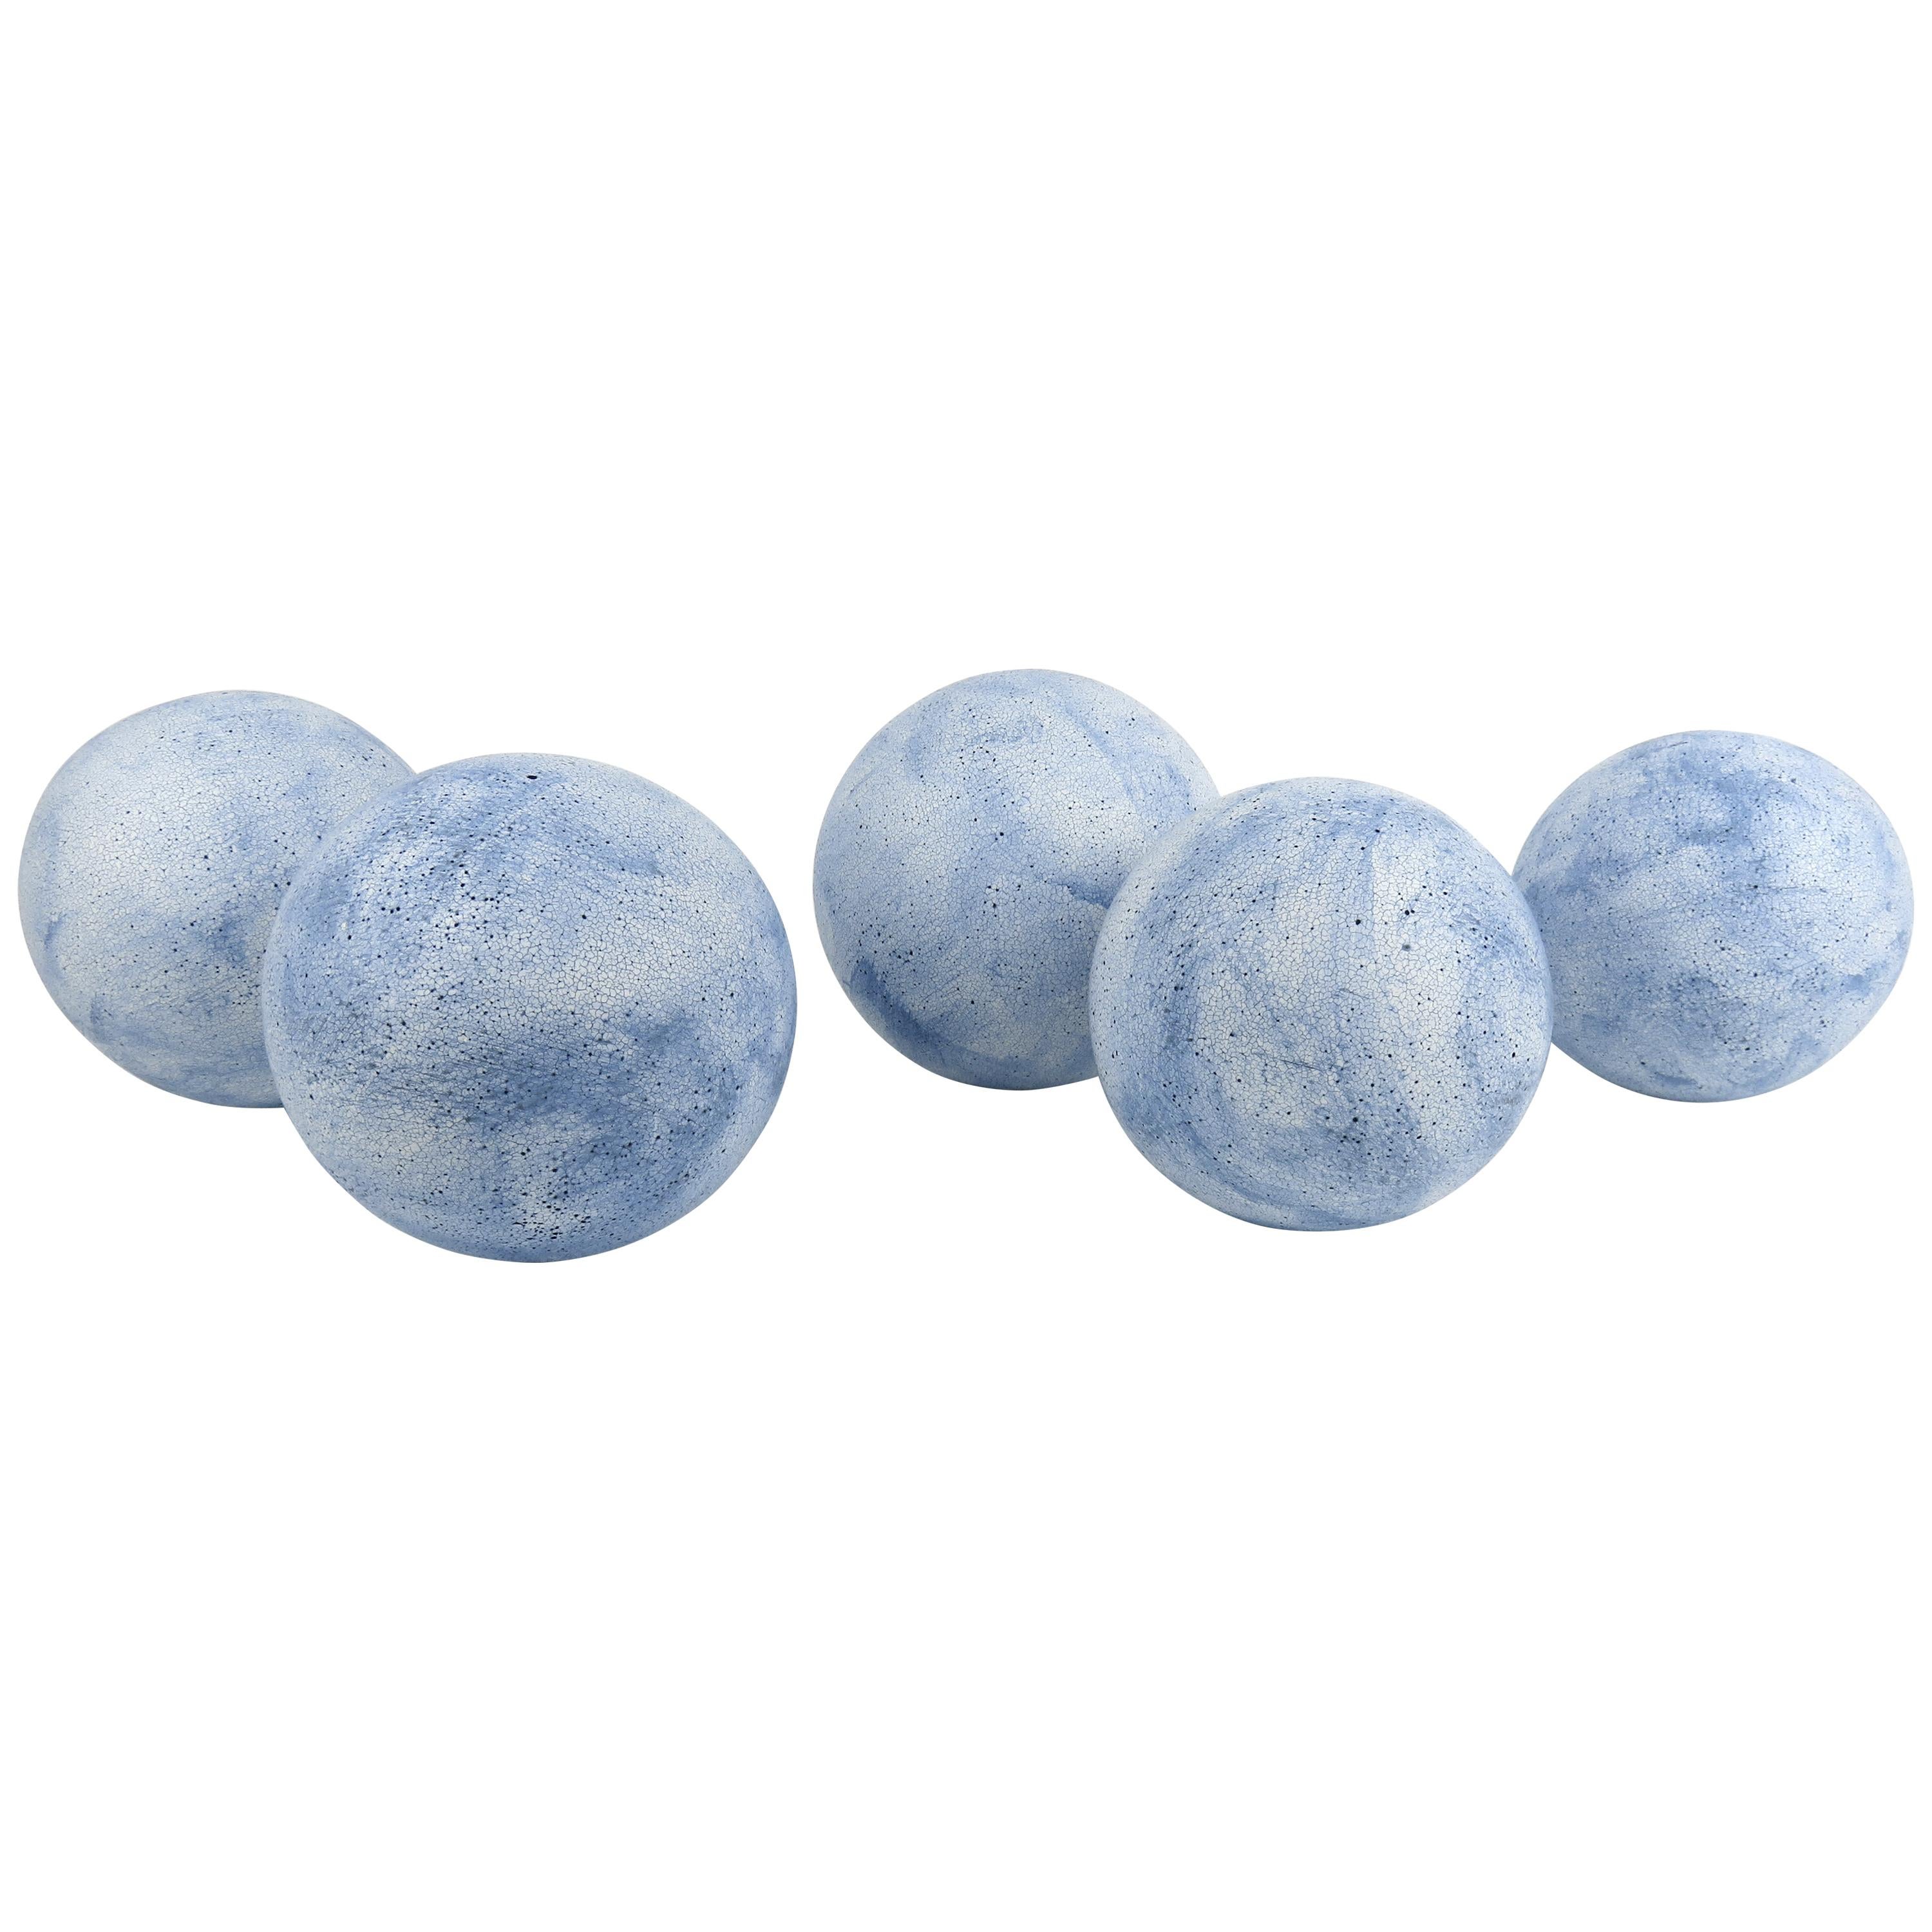 Sphères en céramique bleu ciel fabriquées à la main, terra Sigilatta et oxyde cobalt en vente